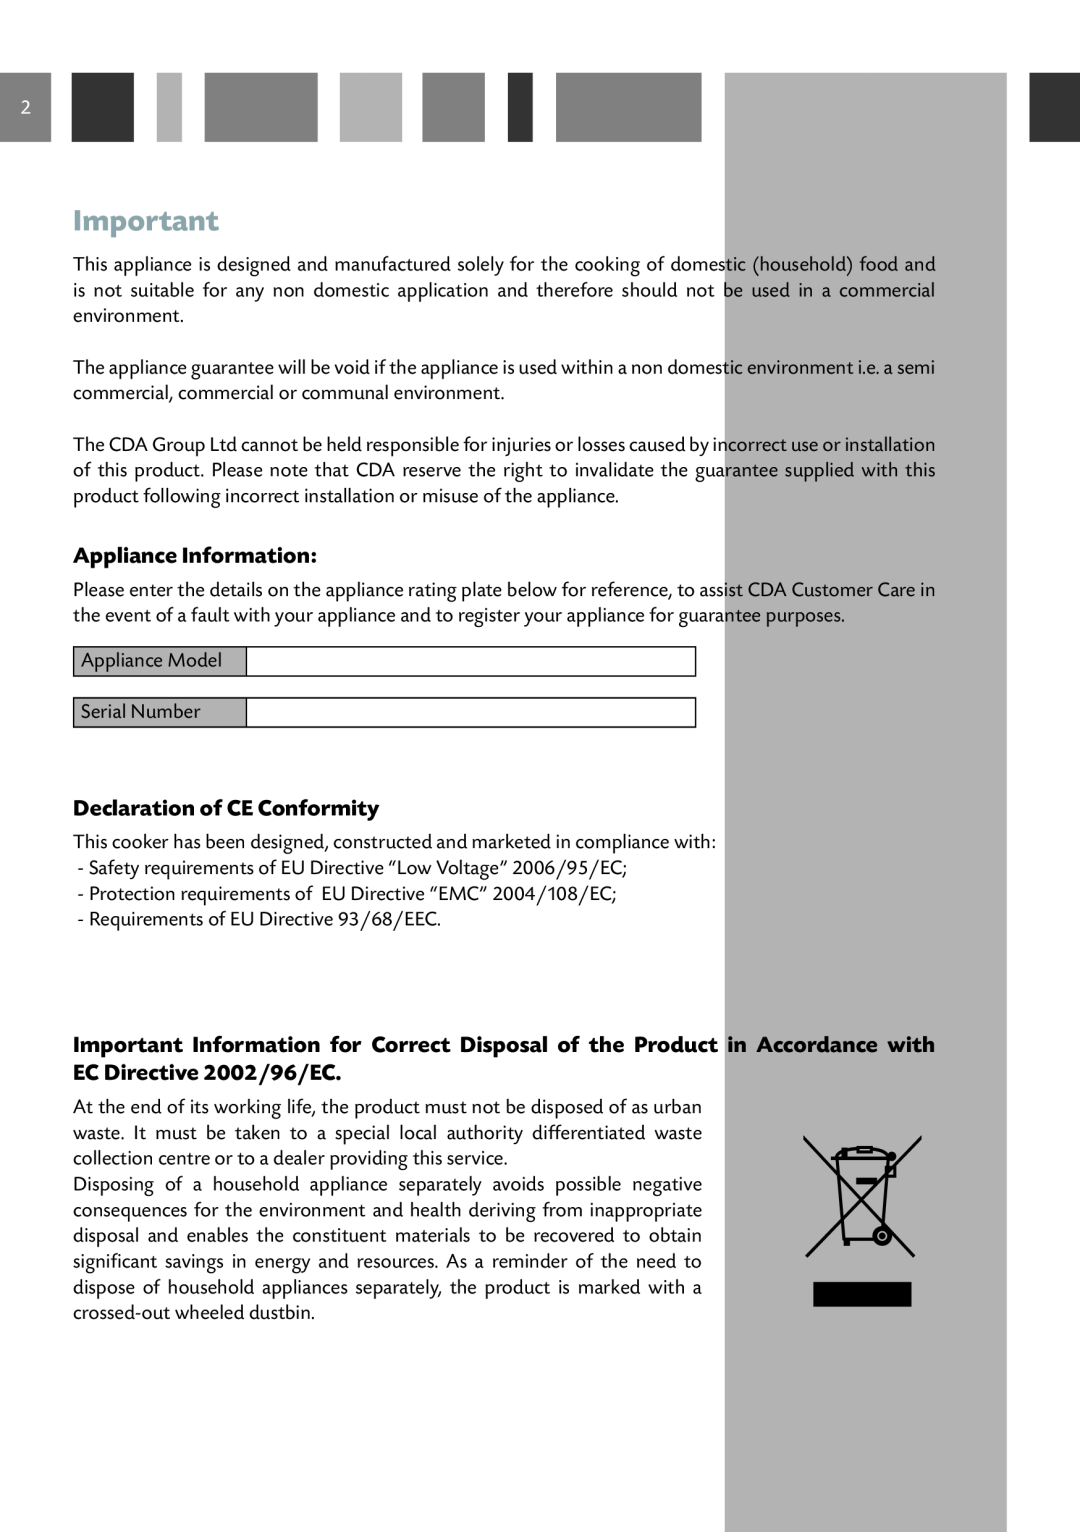 CDA RC 9620 manual Appliance Information, Declaration of CE Conformity 